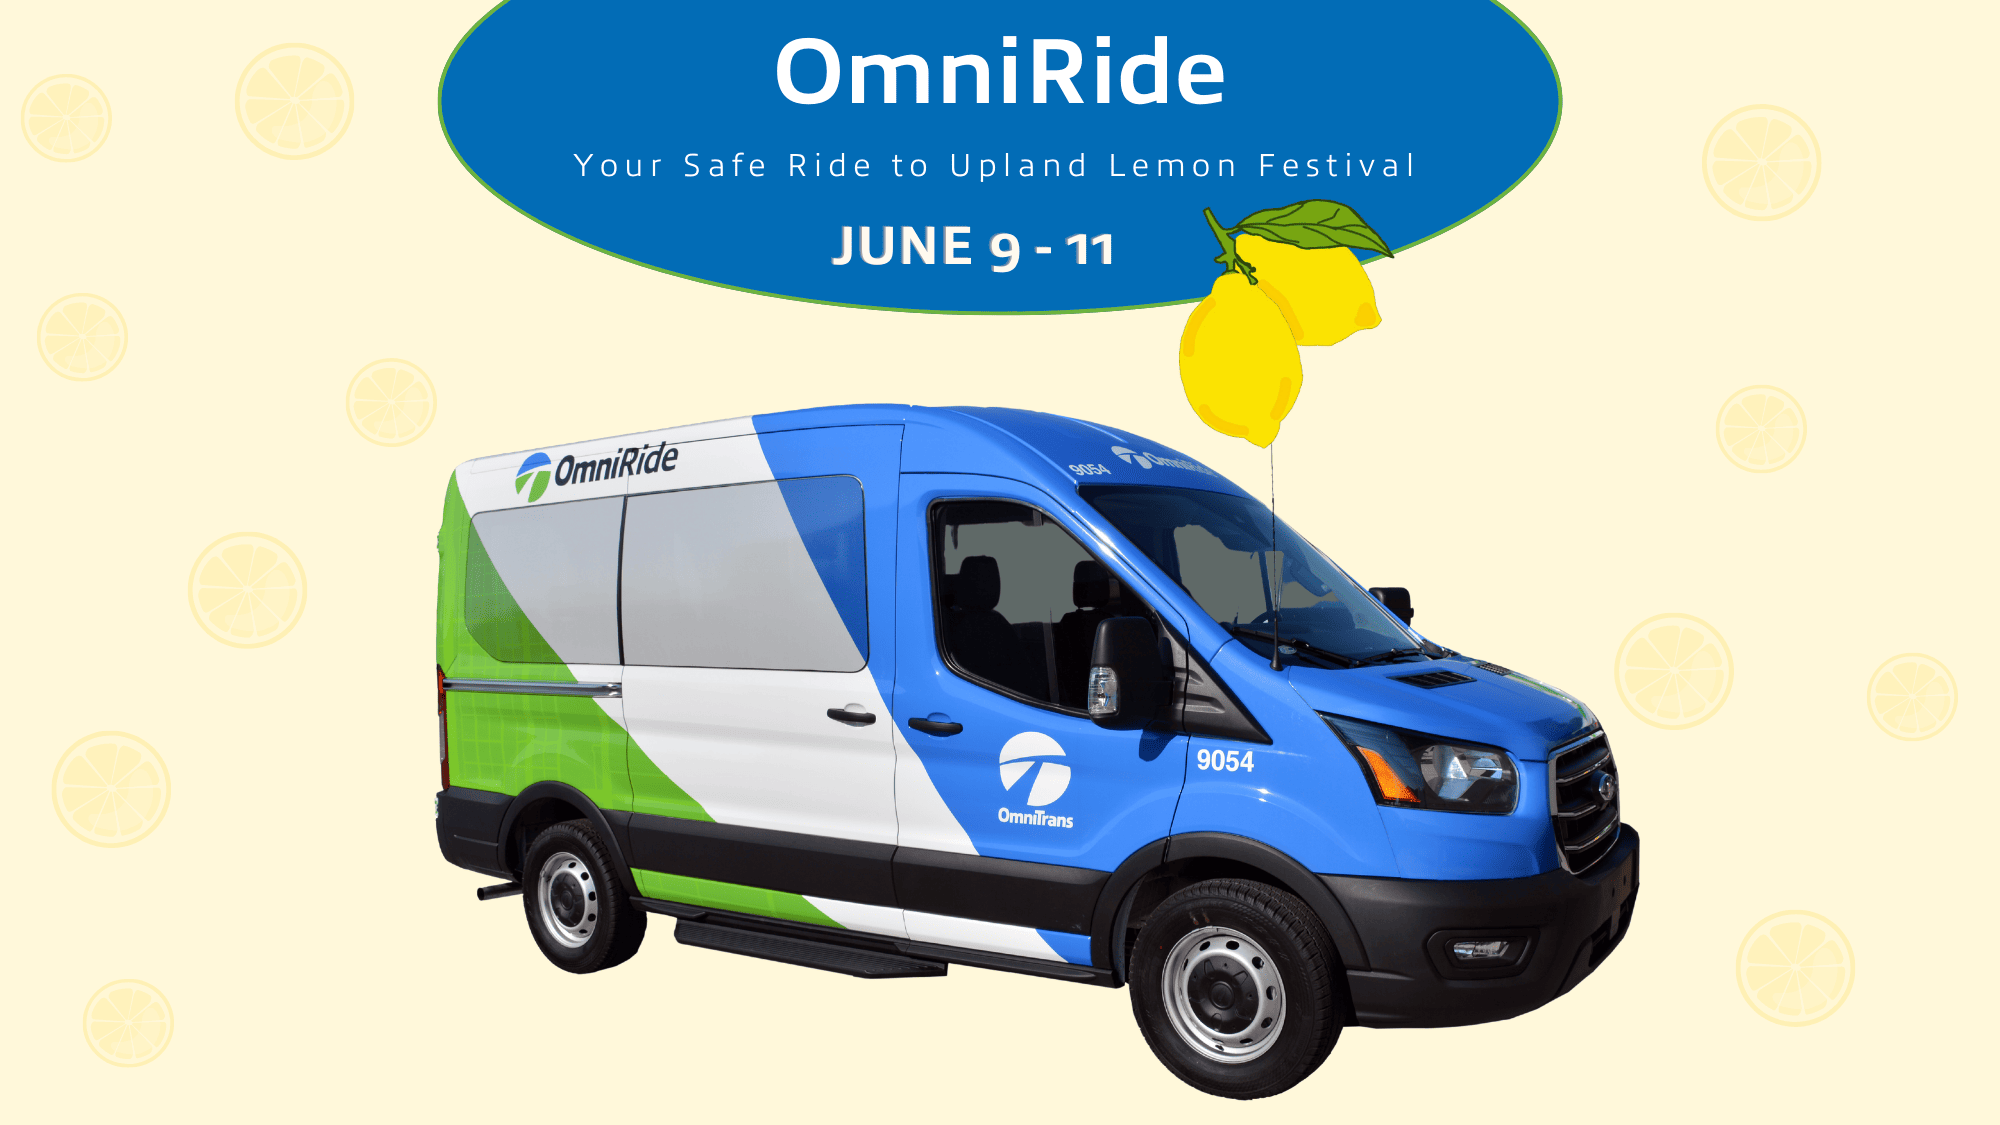 OmniRide – Your Safe Ride to Upland Lemon Festival